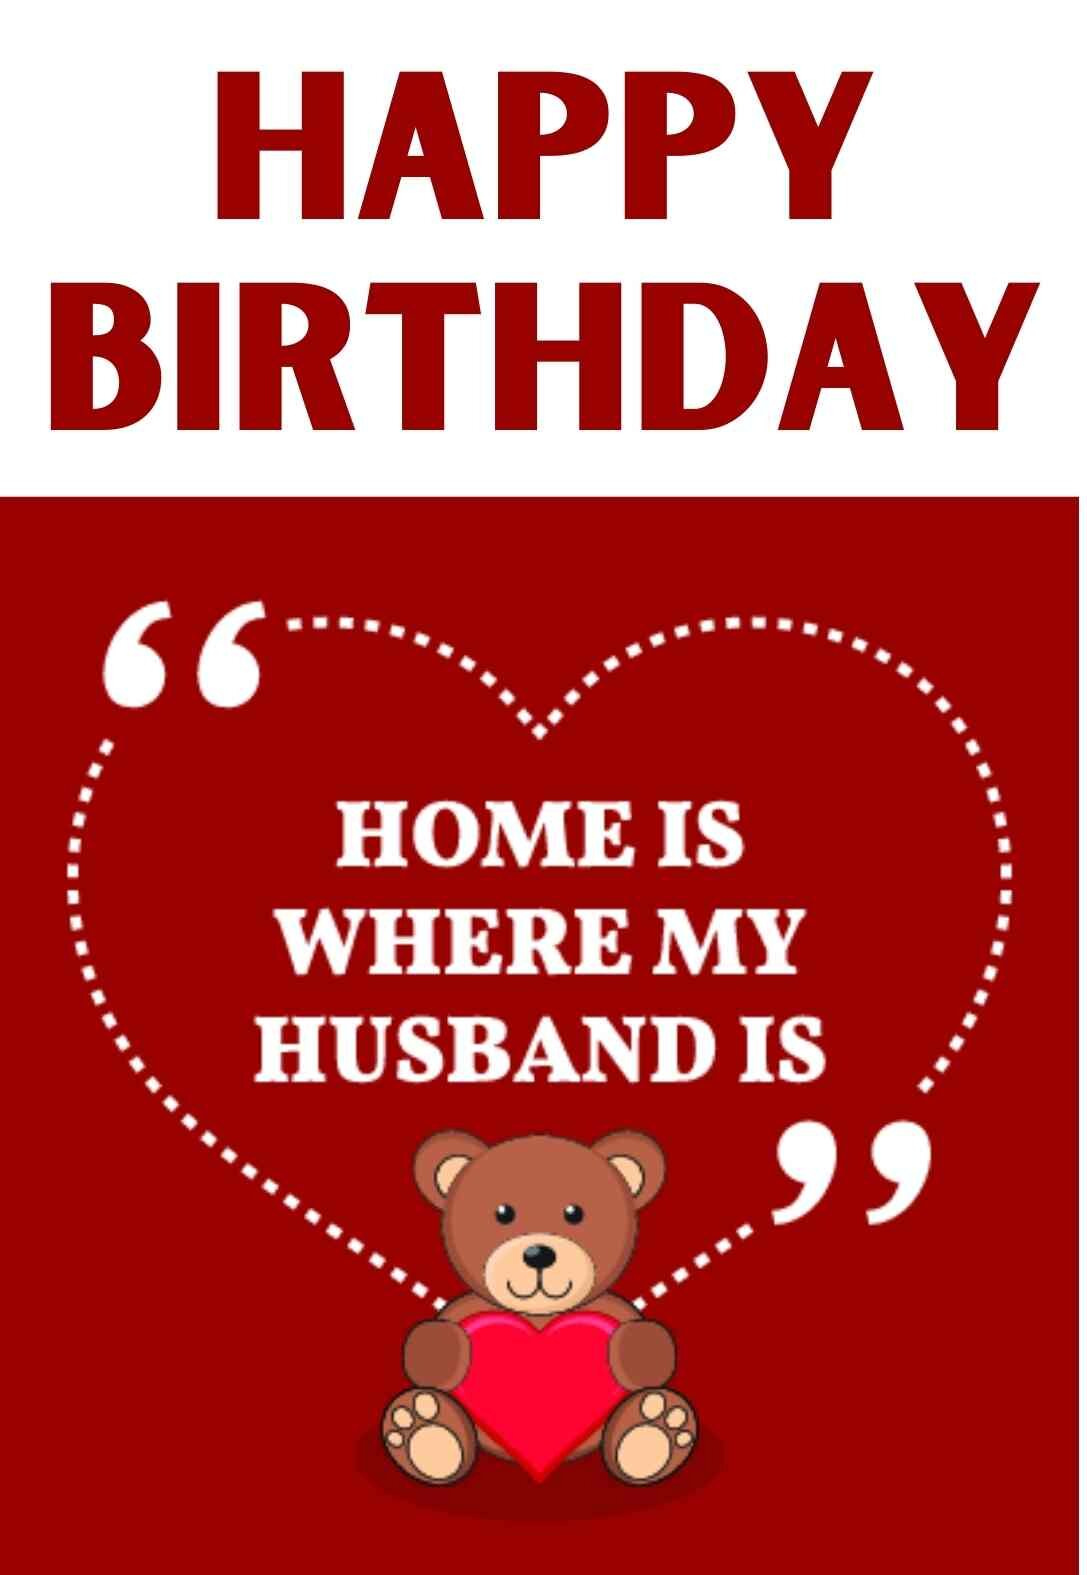 free-funny-birthday-cards-for-husband-birthdaybuzz